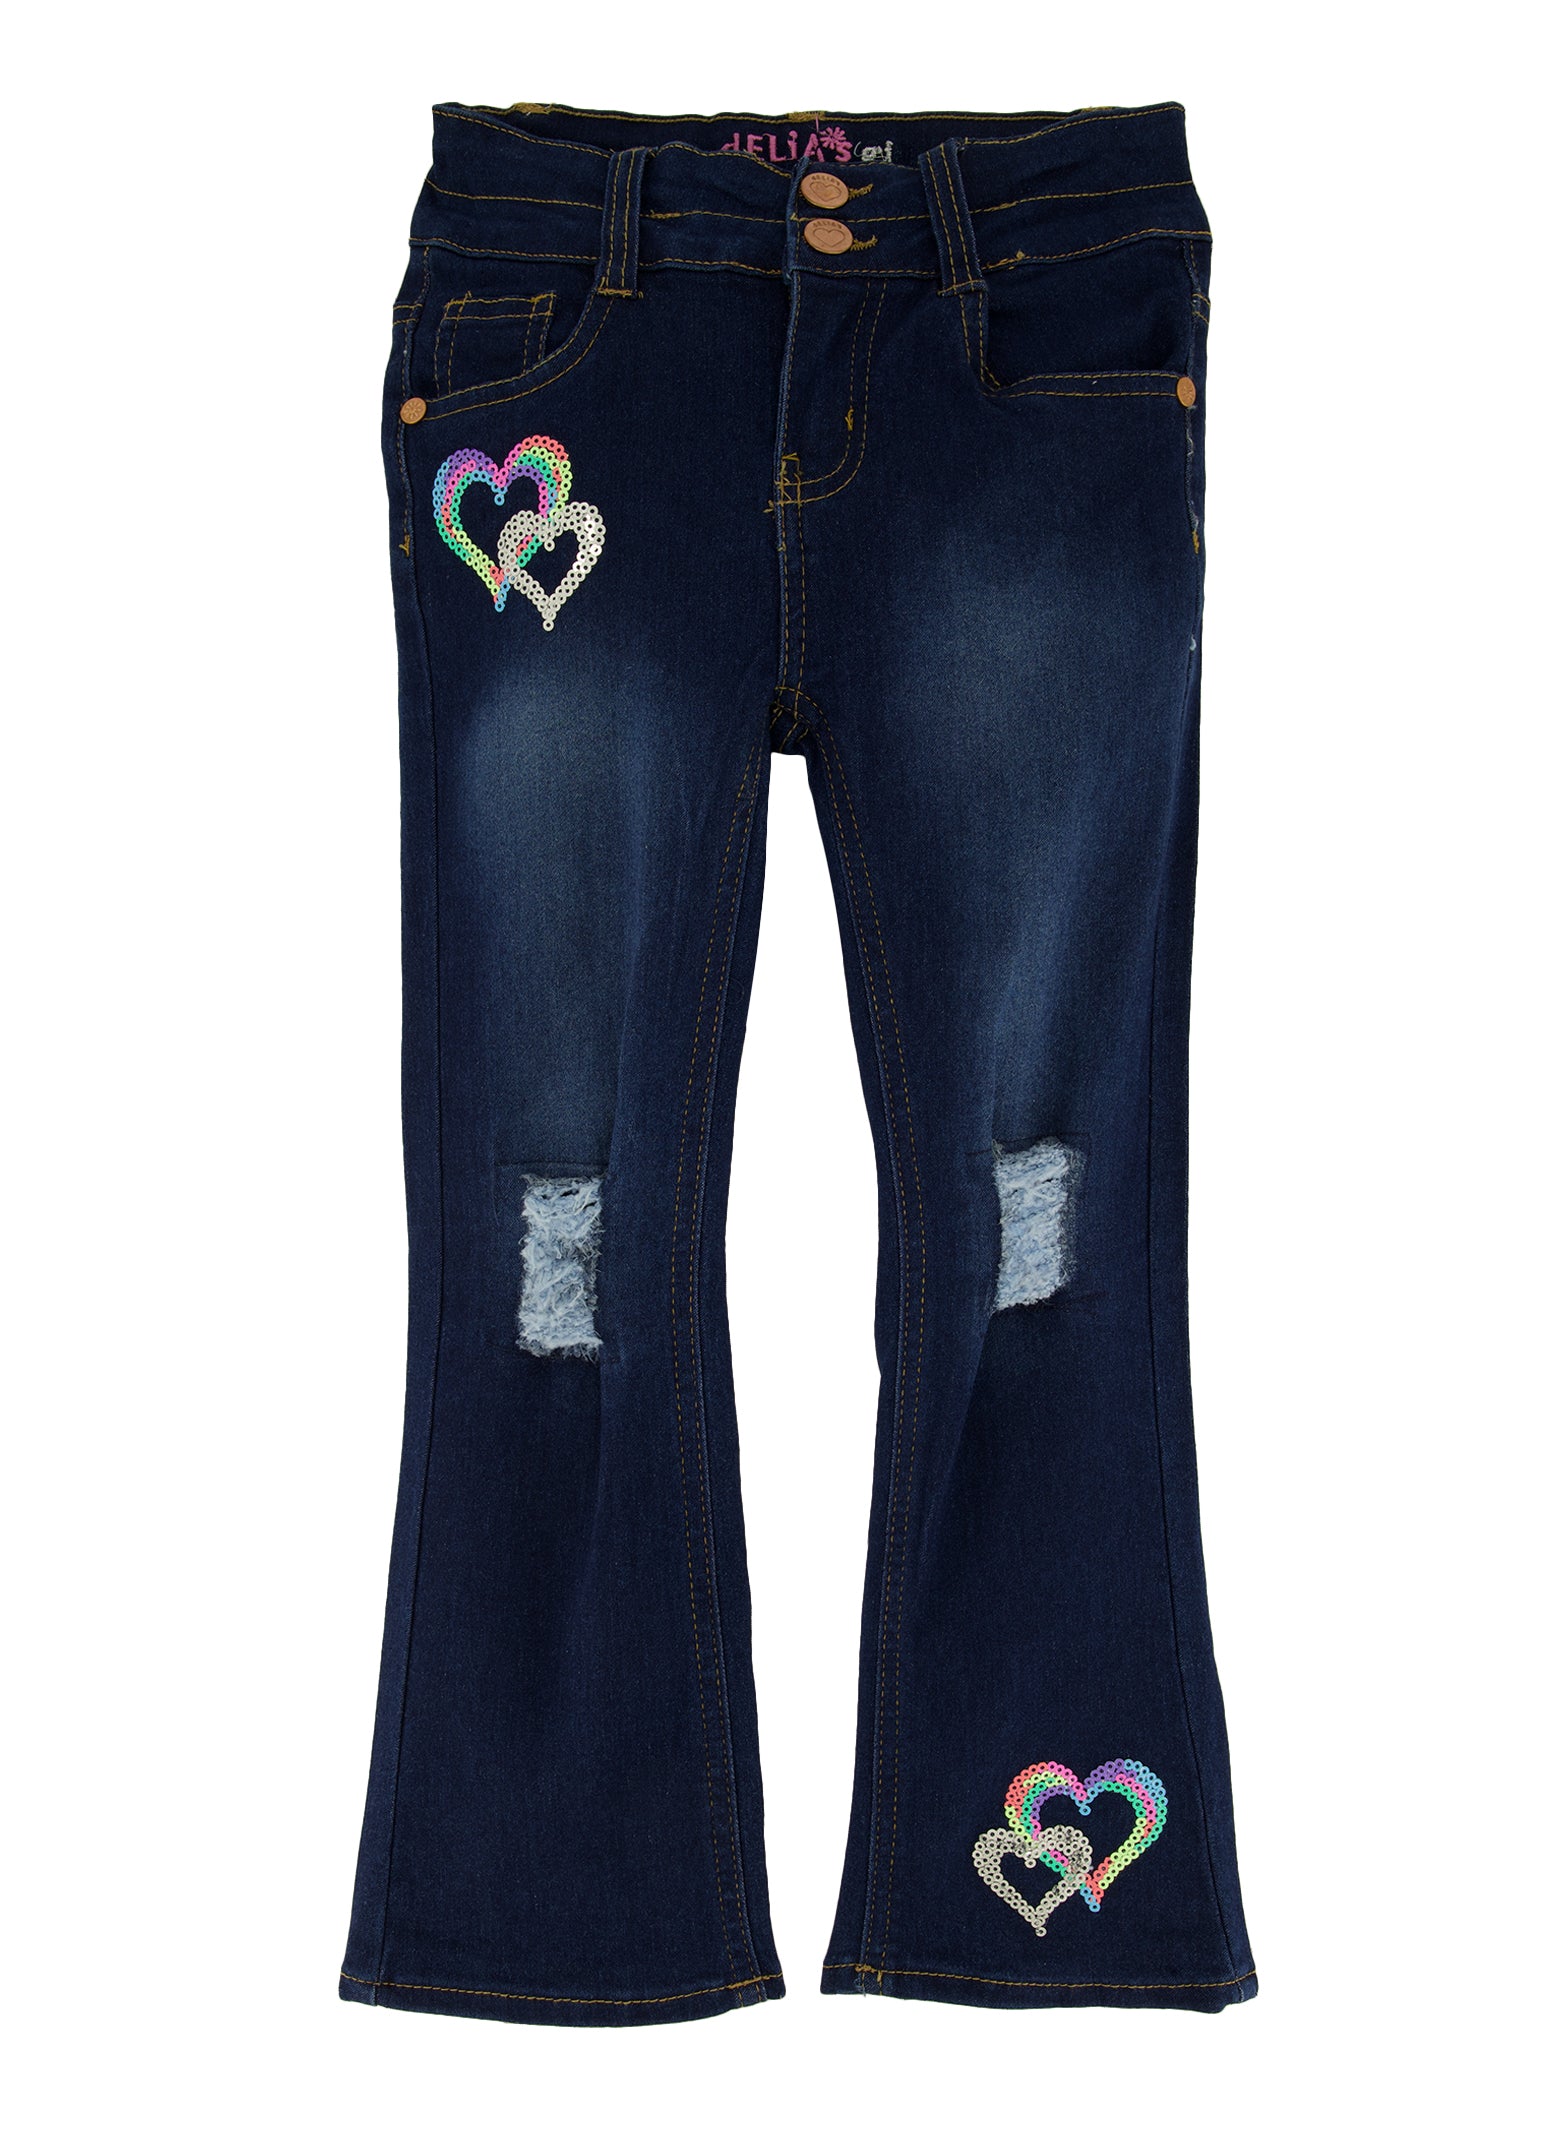 Little Girls Sequin Heart Distressed Flare Jeans - Dark Wash